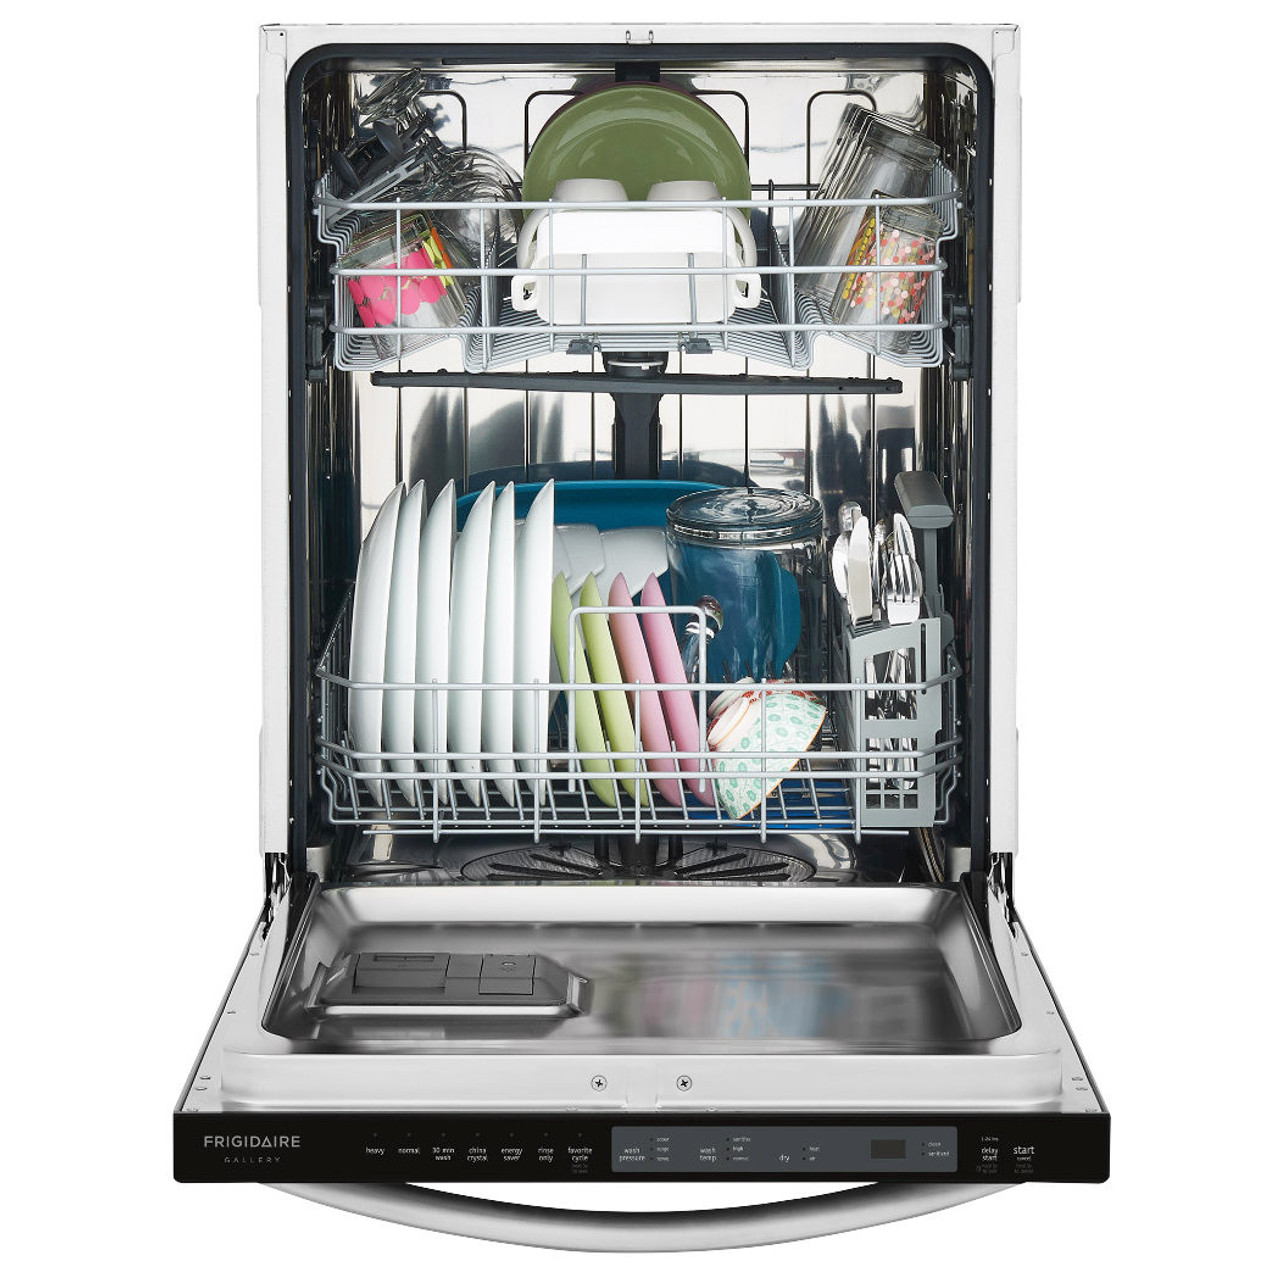 Frigidaire Gallery - 24 Built-In Dishwasher